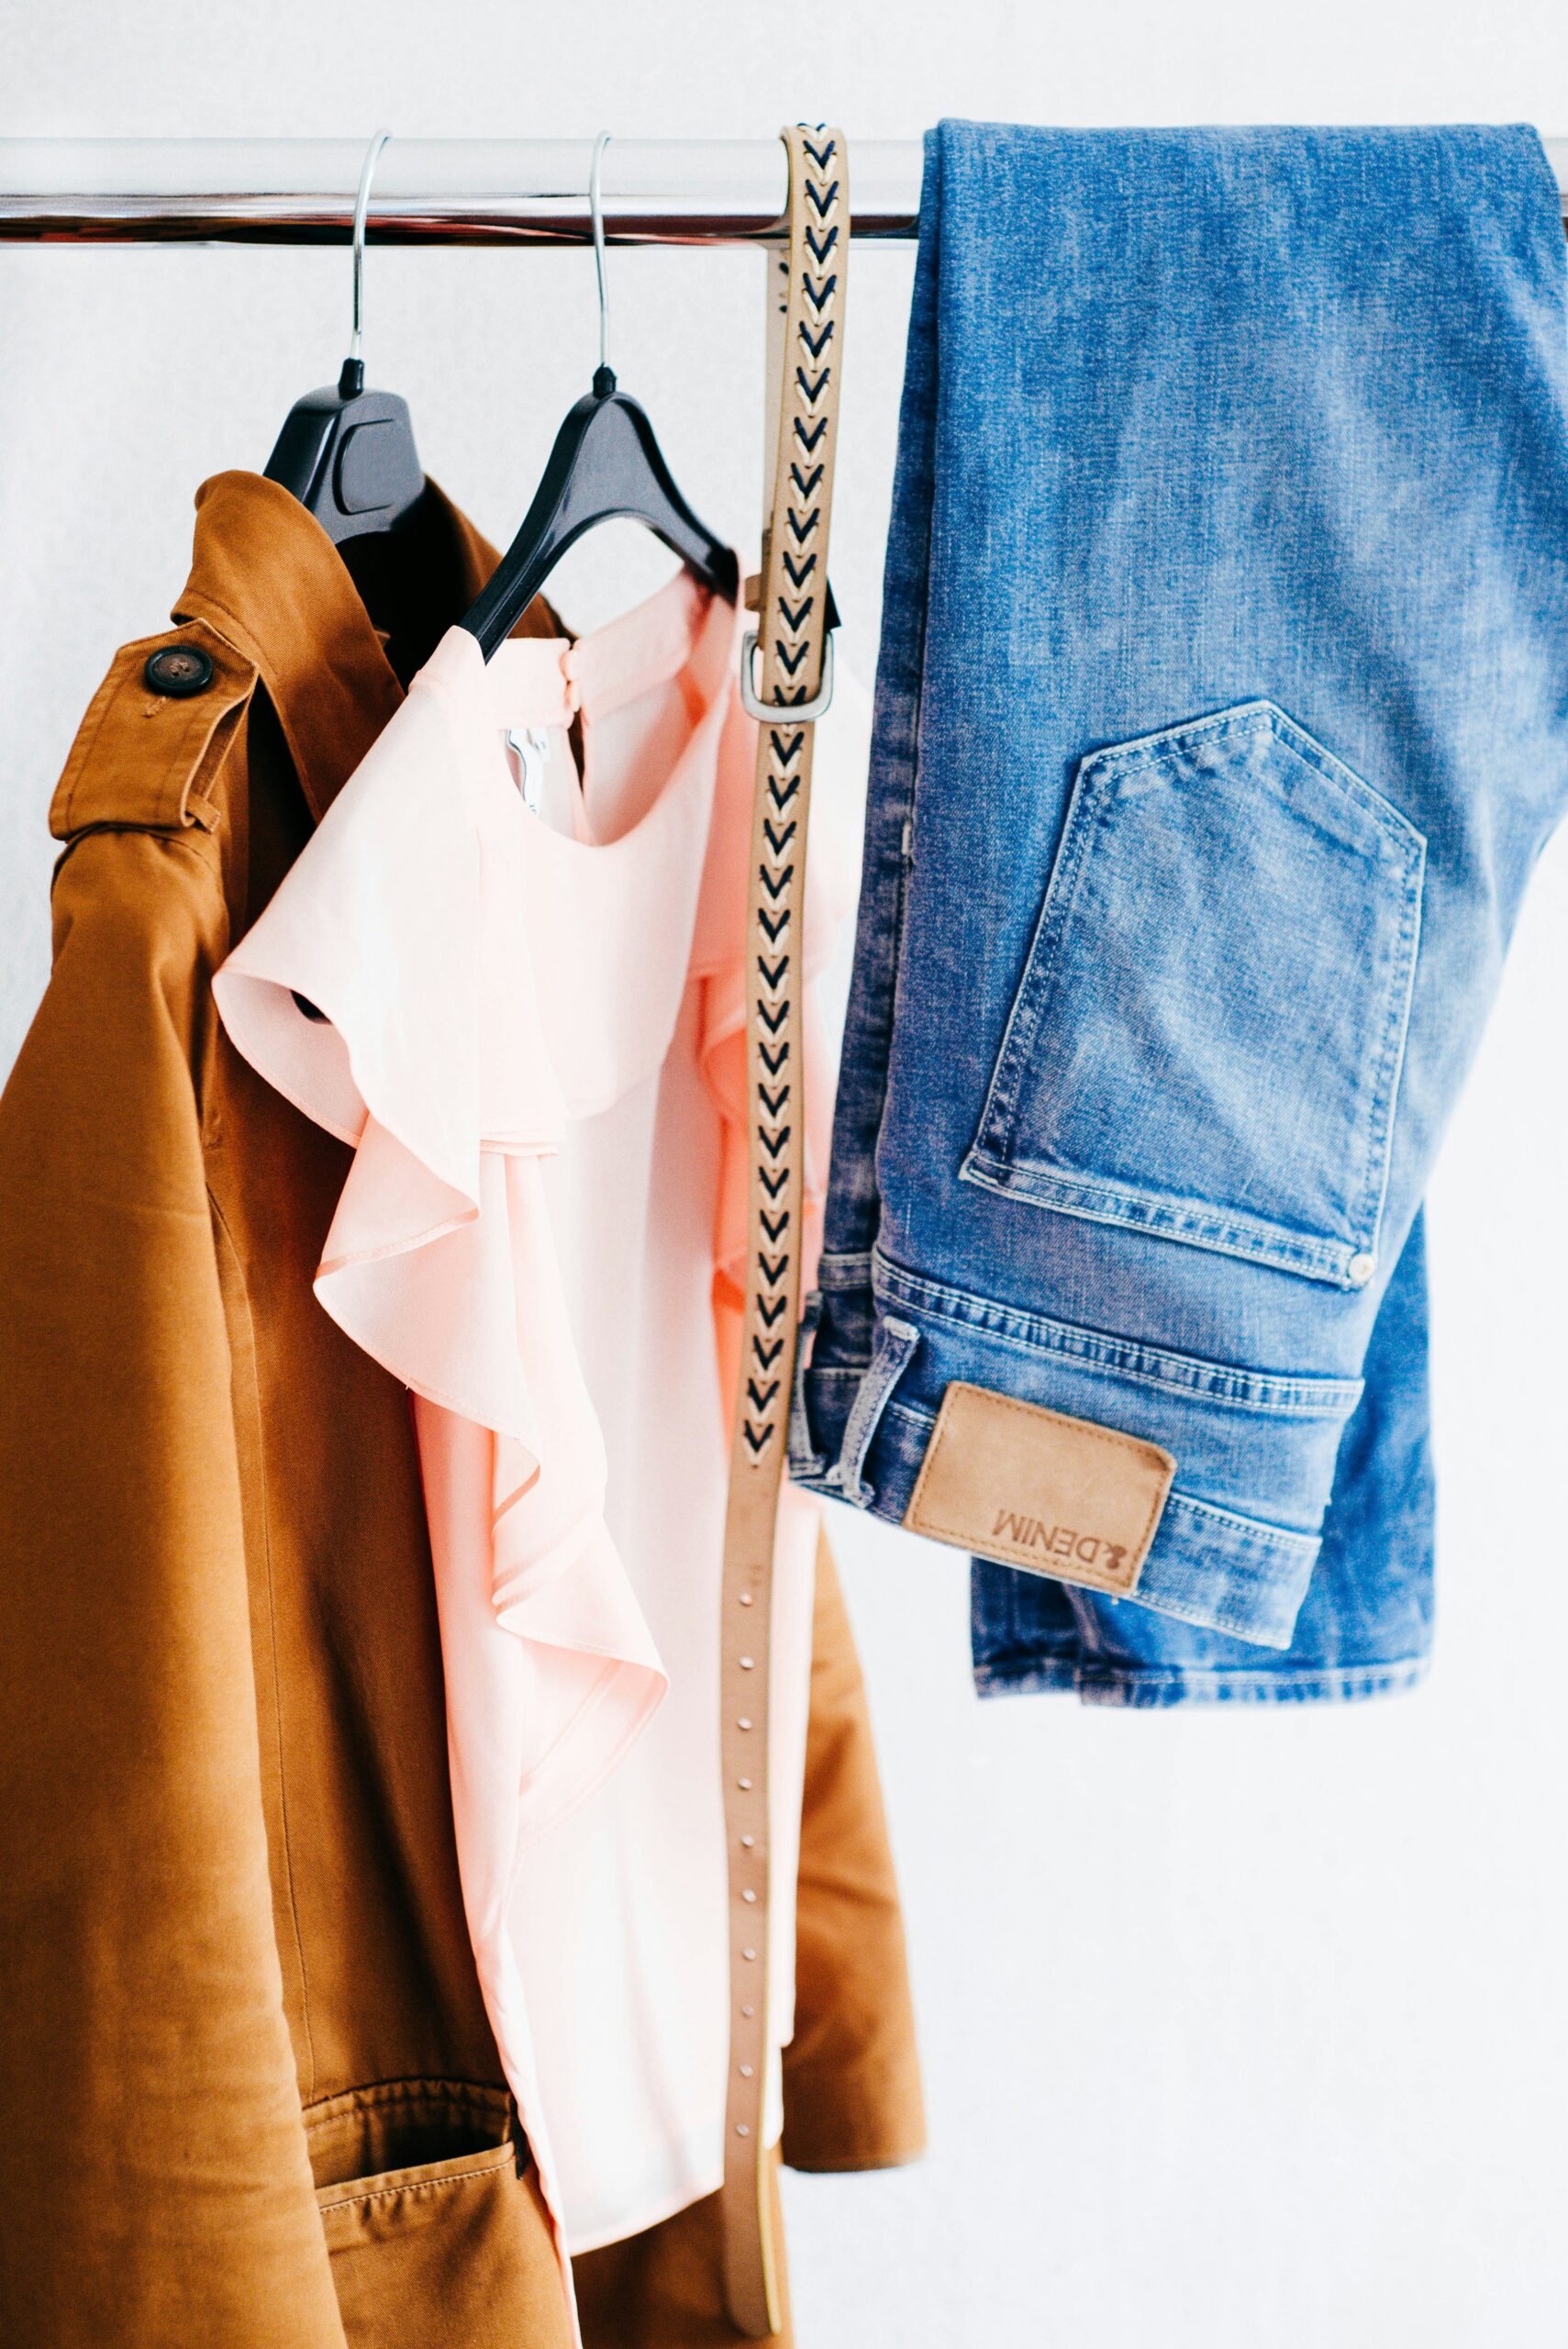 organize-your-closet-hanging-clothes